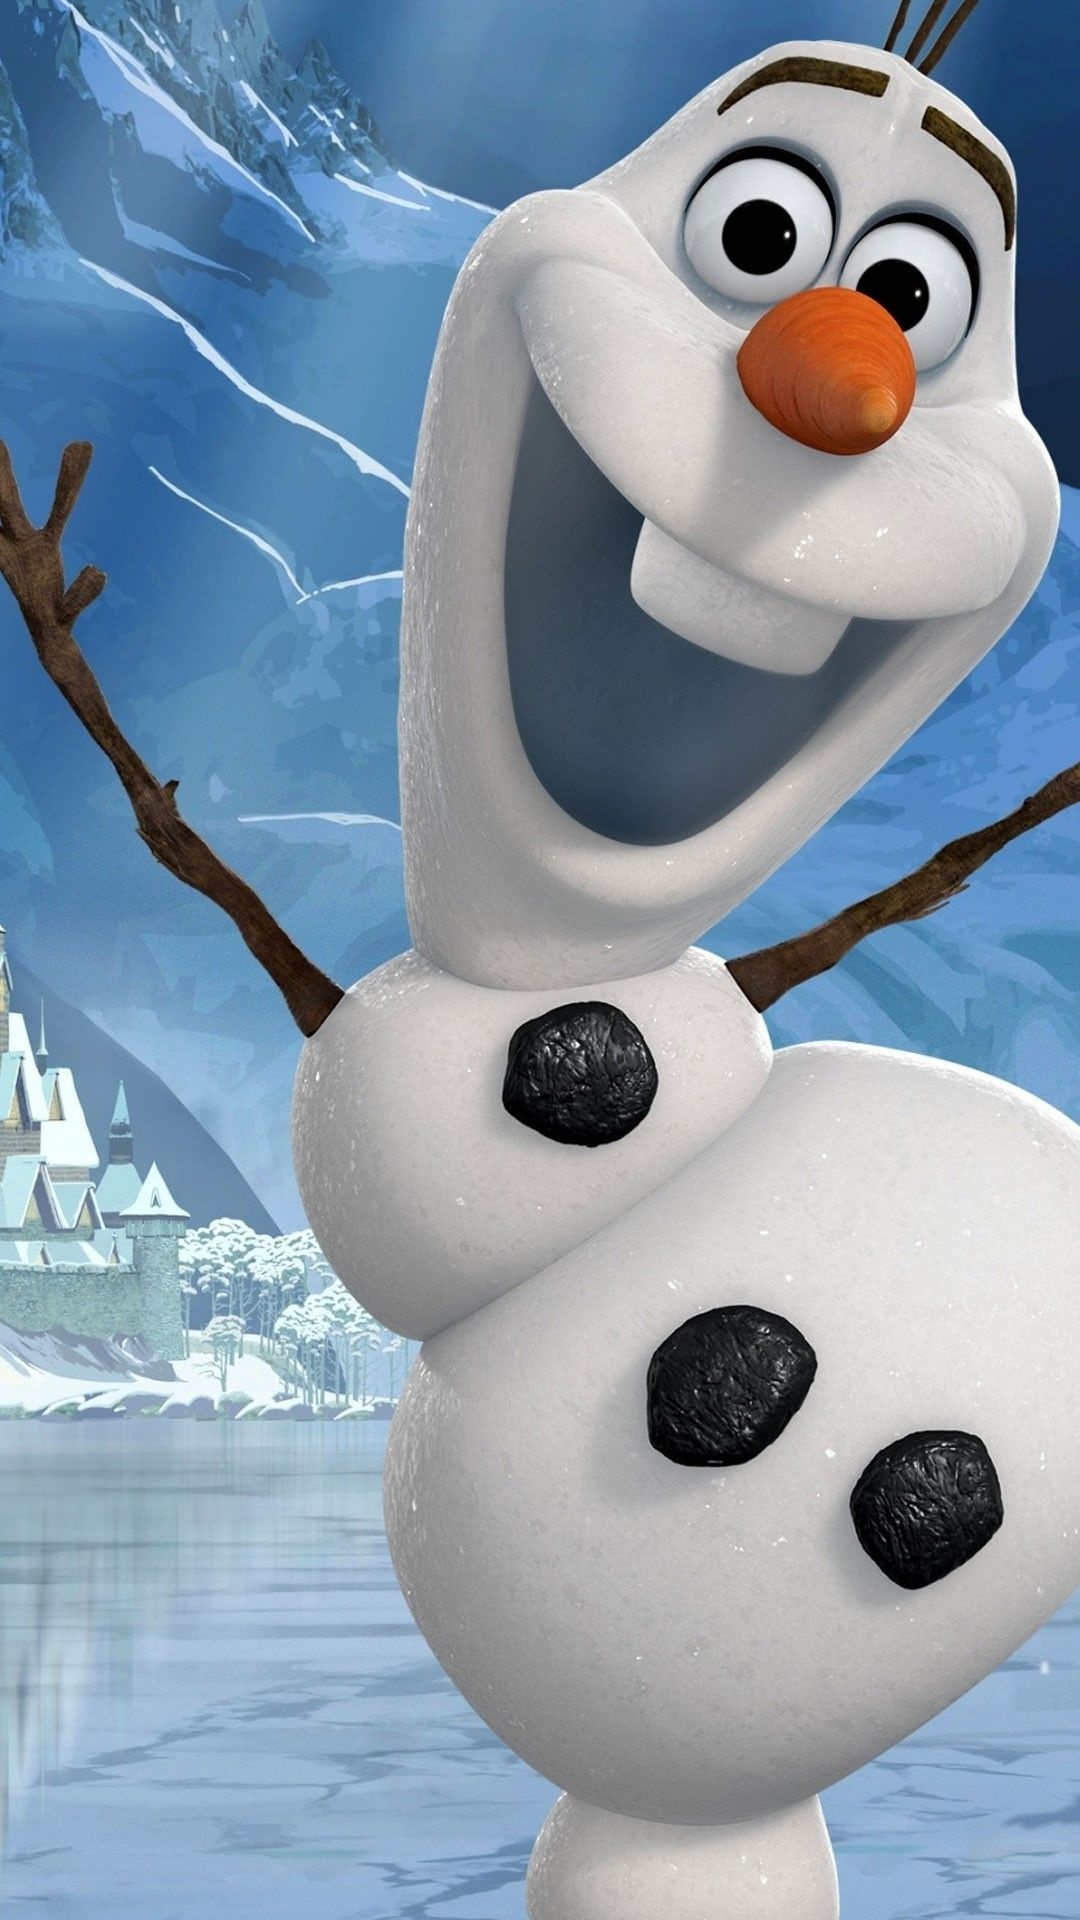 Frozen Olaf wallpaper, Images, iPhone 6 Plus wallpaper, Frozen, 1080x1920 Full HD Handy